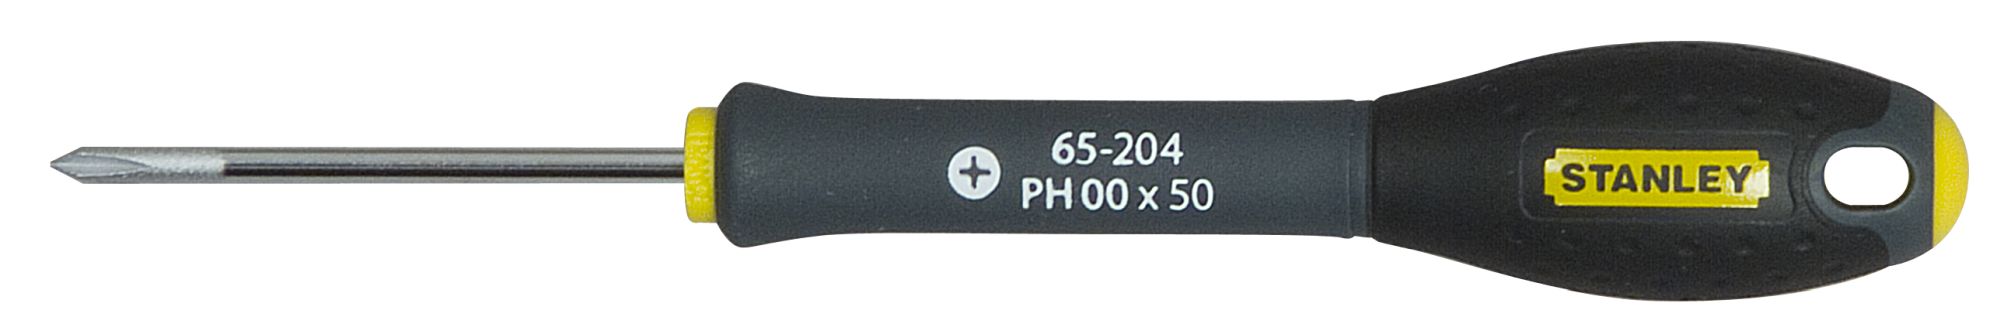 Destornillador FatMax®  PH00 X 50 mm SBD-0-65-204 | DESTORNILLADORES